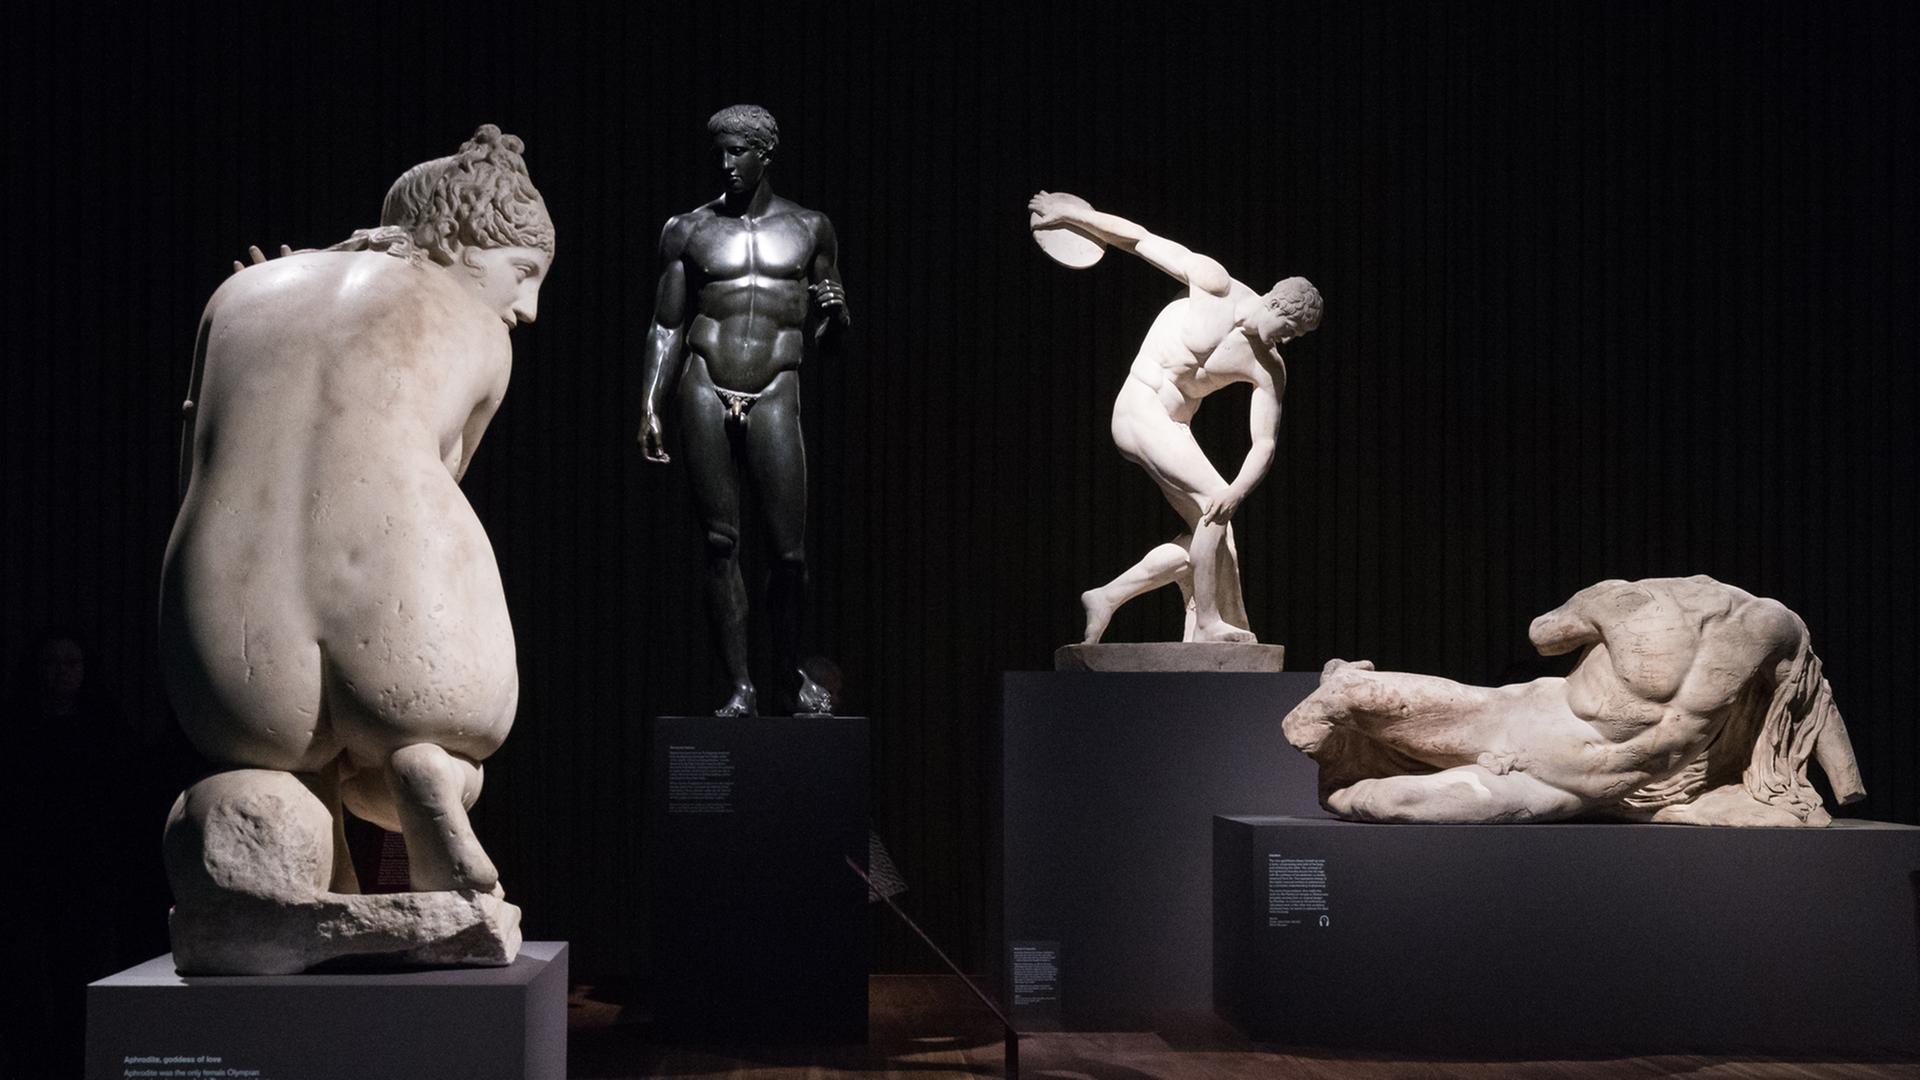 Blick in die Ausstellung "Defining beauty: the body in ancient Greek art" im British Museum in London.